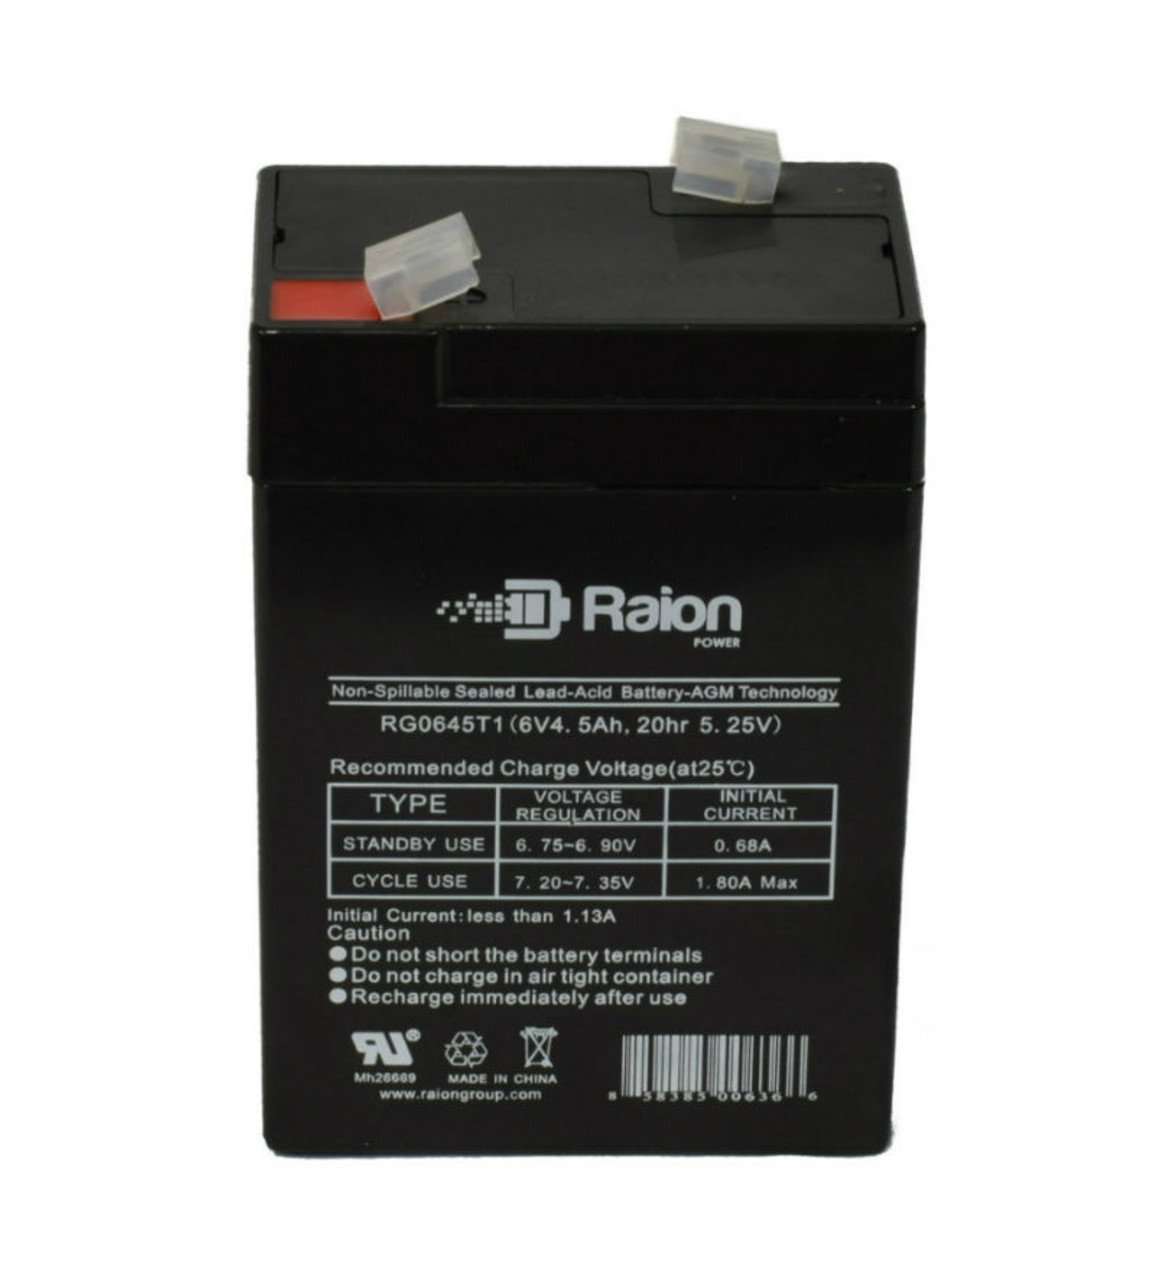 Raion Power RG0645T1 Replacement Battery Cartridge for Sonnenschein A506/4.5K